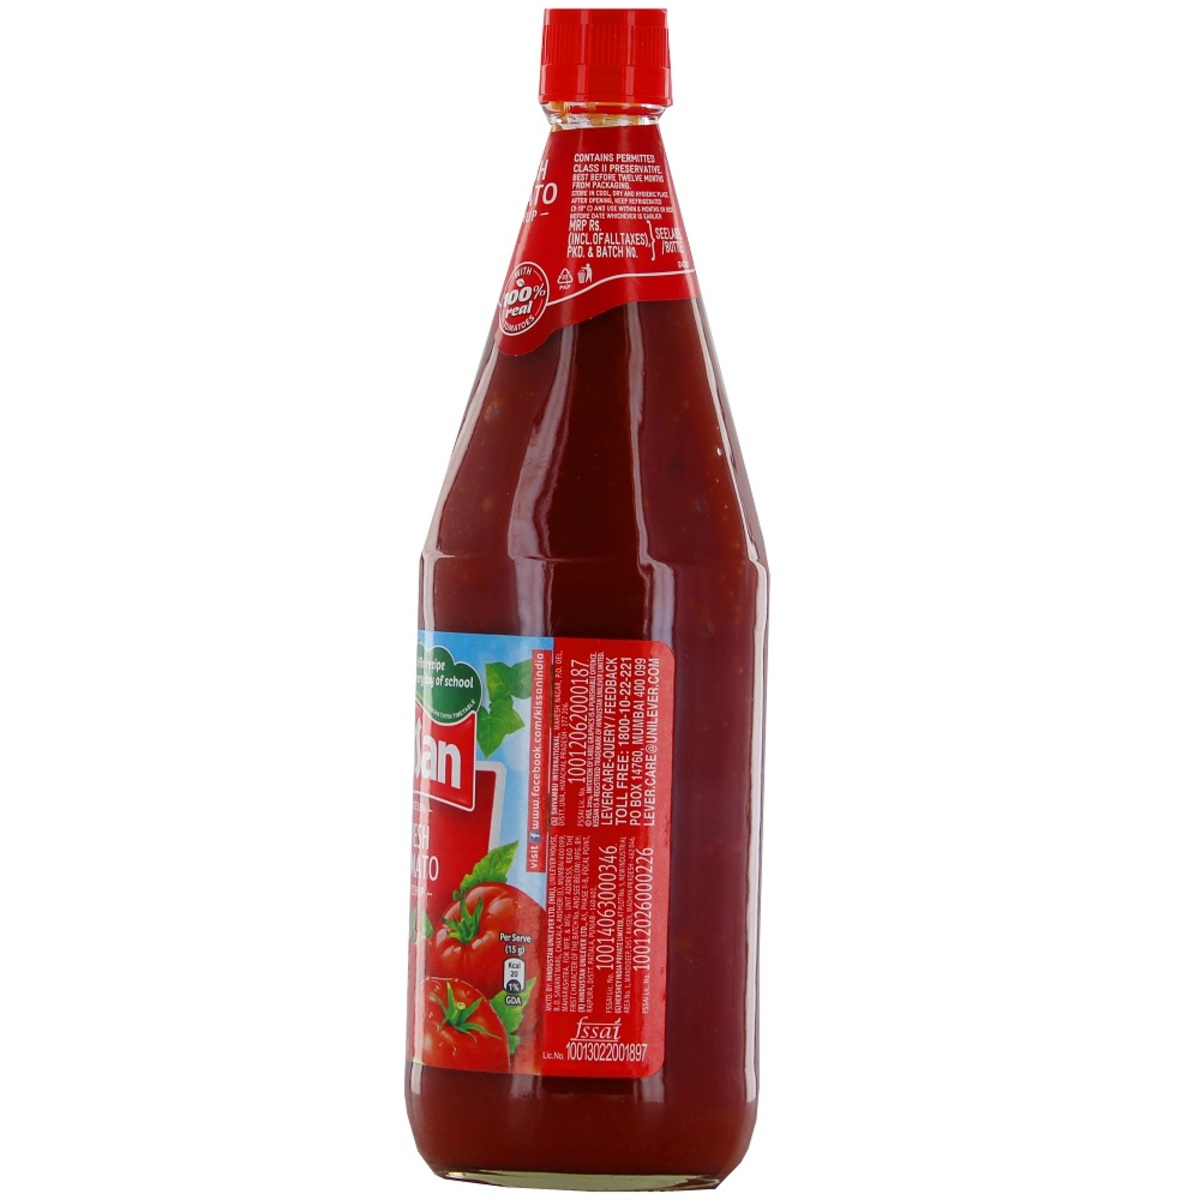 Kissan Fresh Tomato Ketchup Bottle 1kg